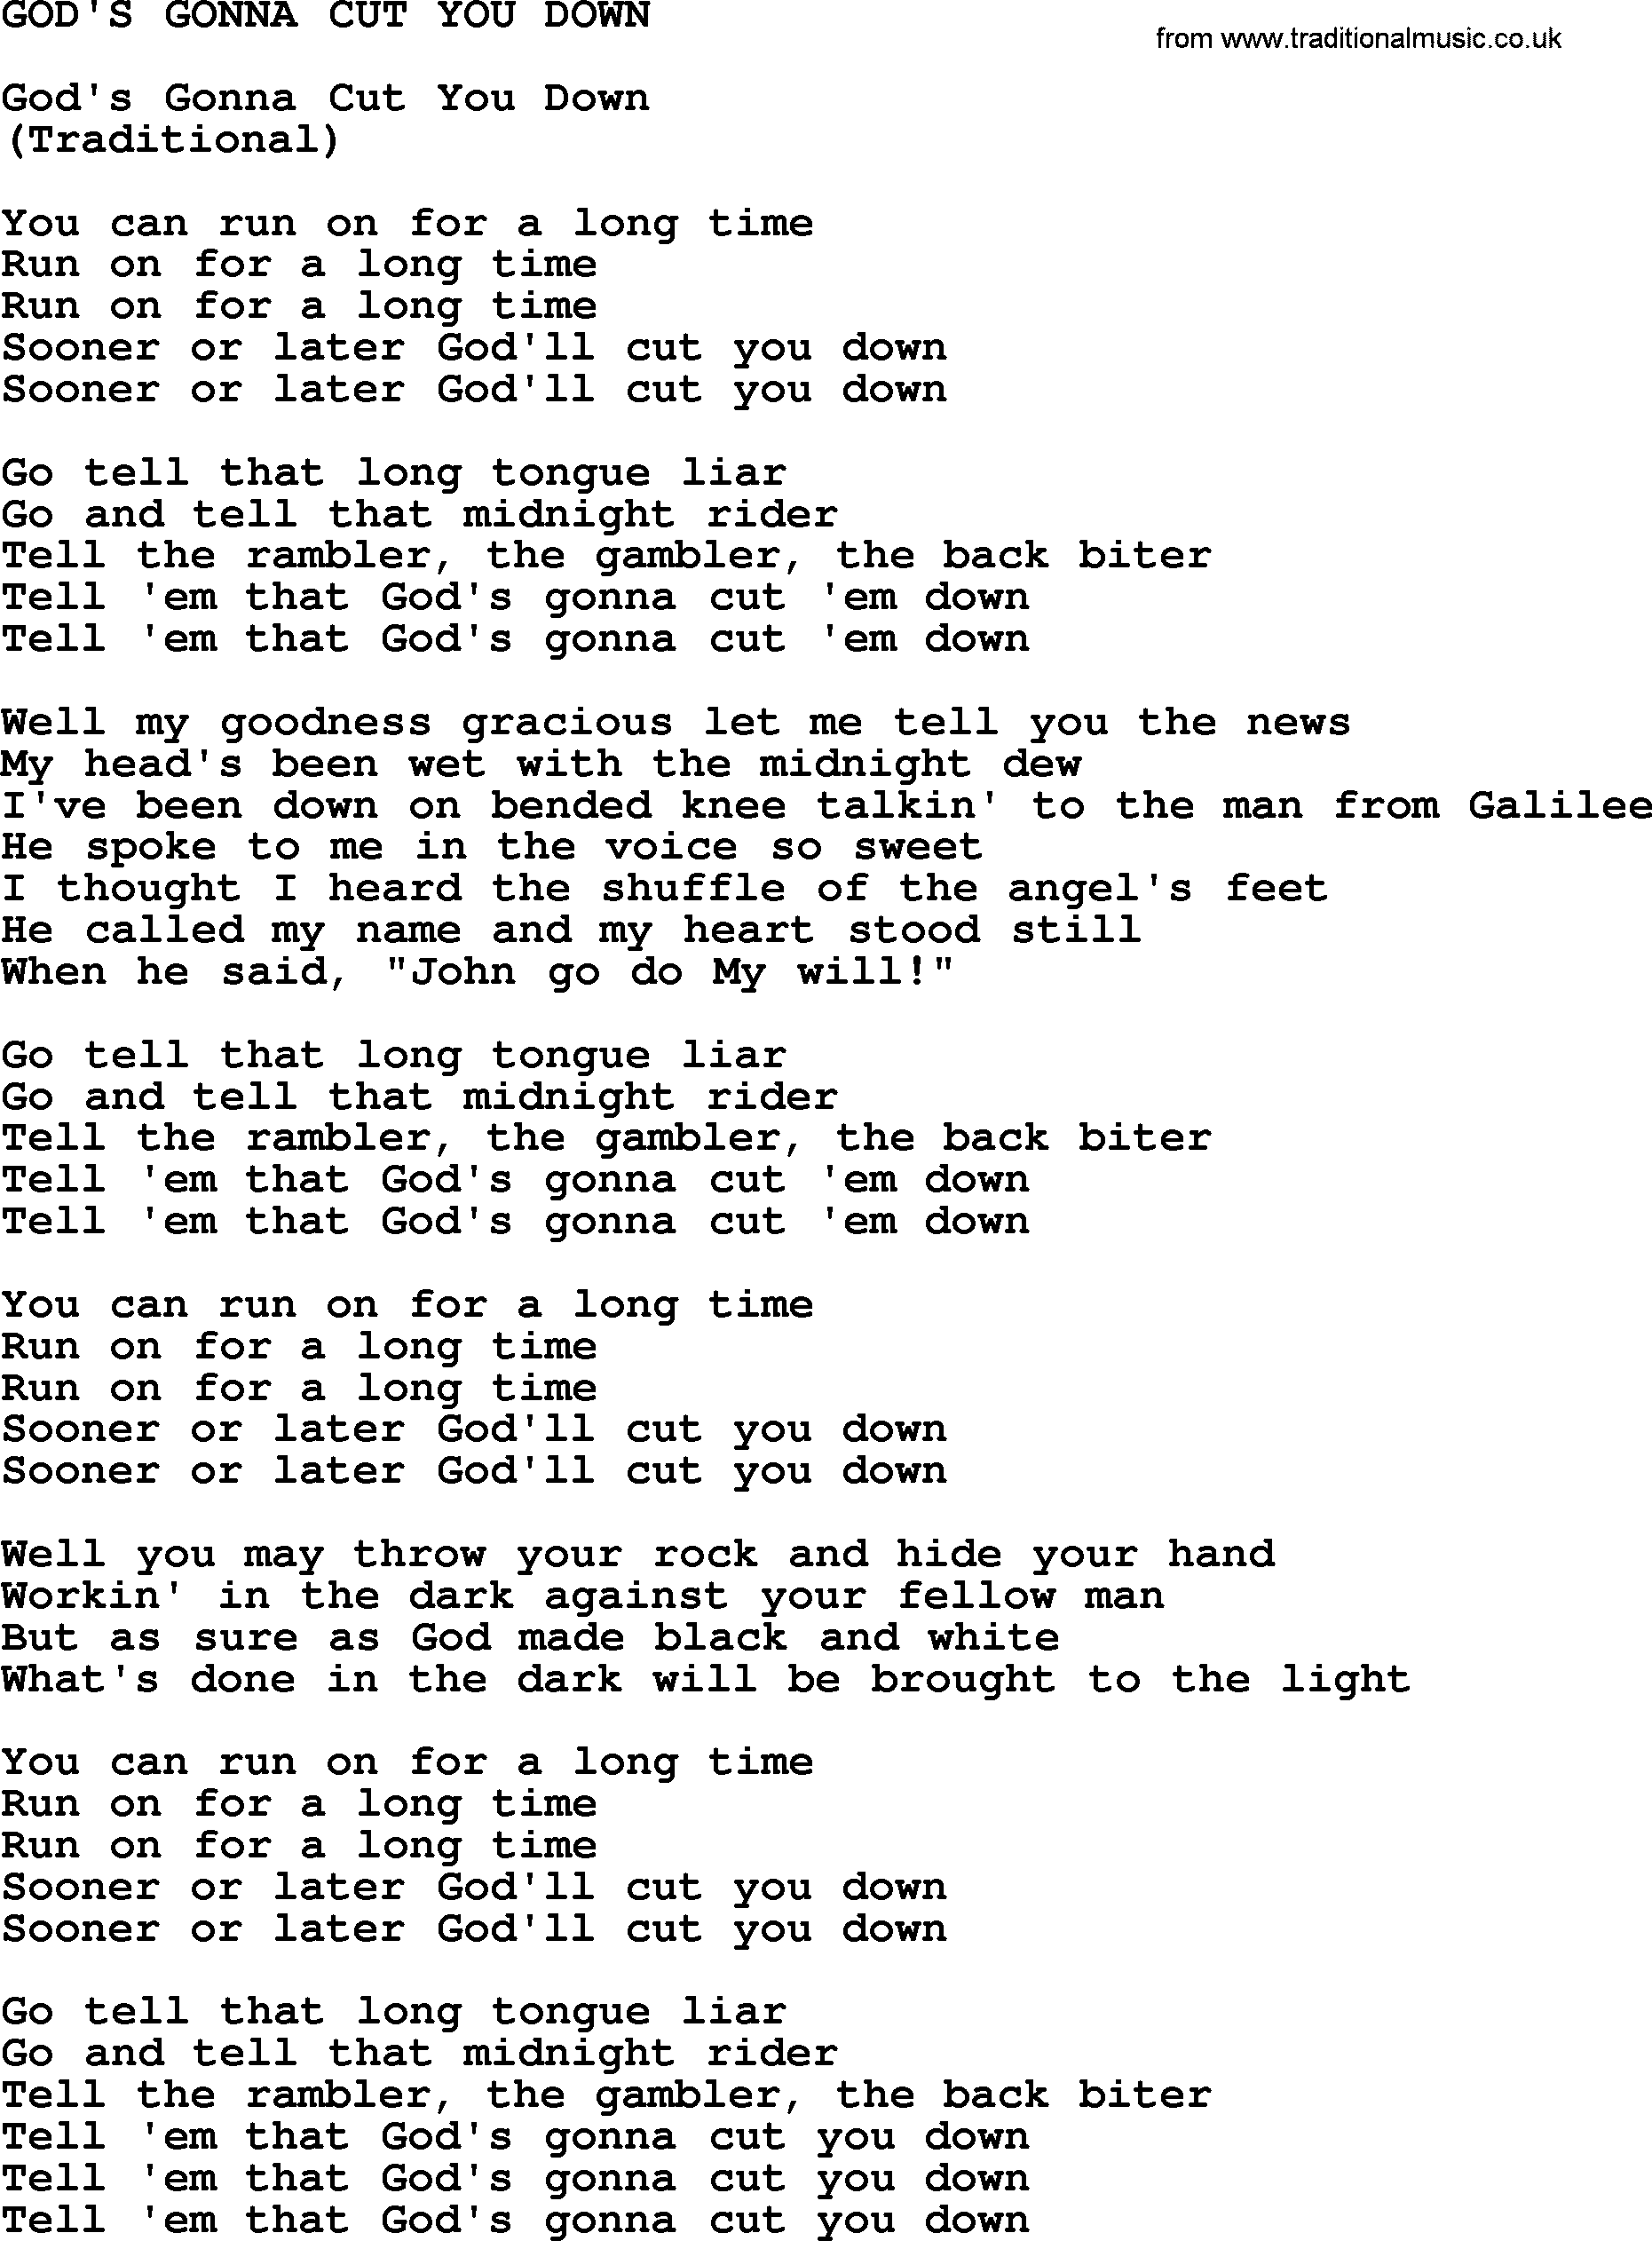 Johnny Cash song God's Gonna Cut You Down.txt lyrics